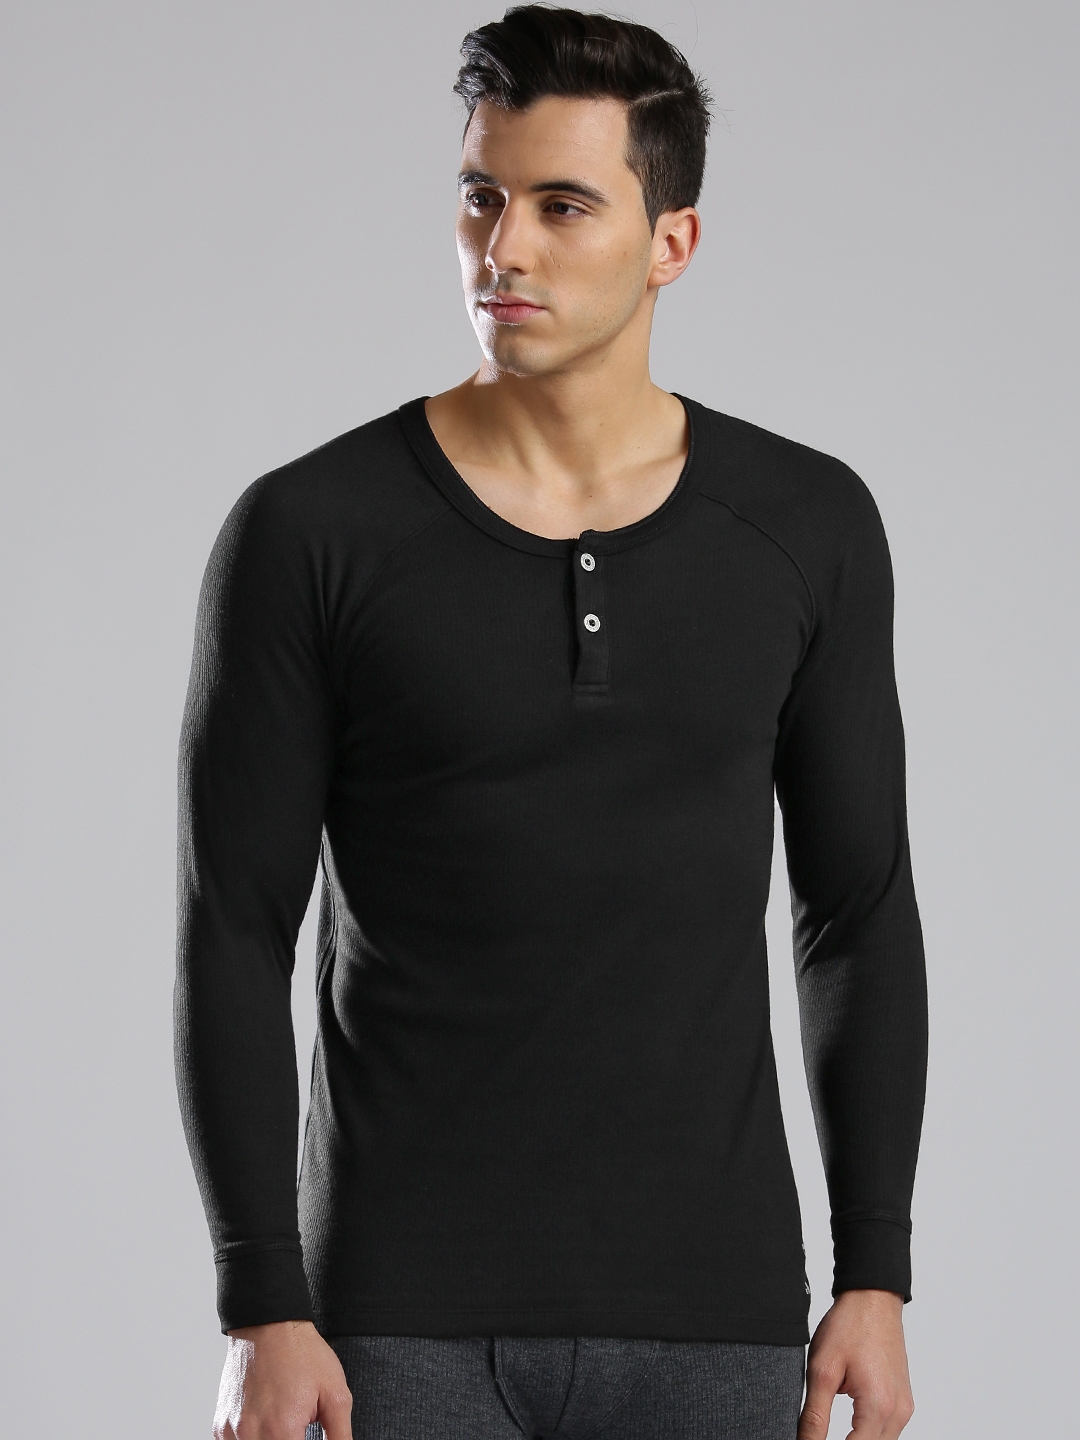 Buy Levis Men Black Thermal Henley T Shirt 300 - Thermal Tops for Men  1695704 | Myntra